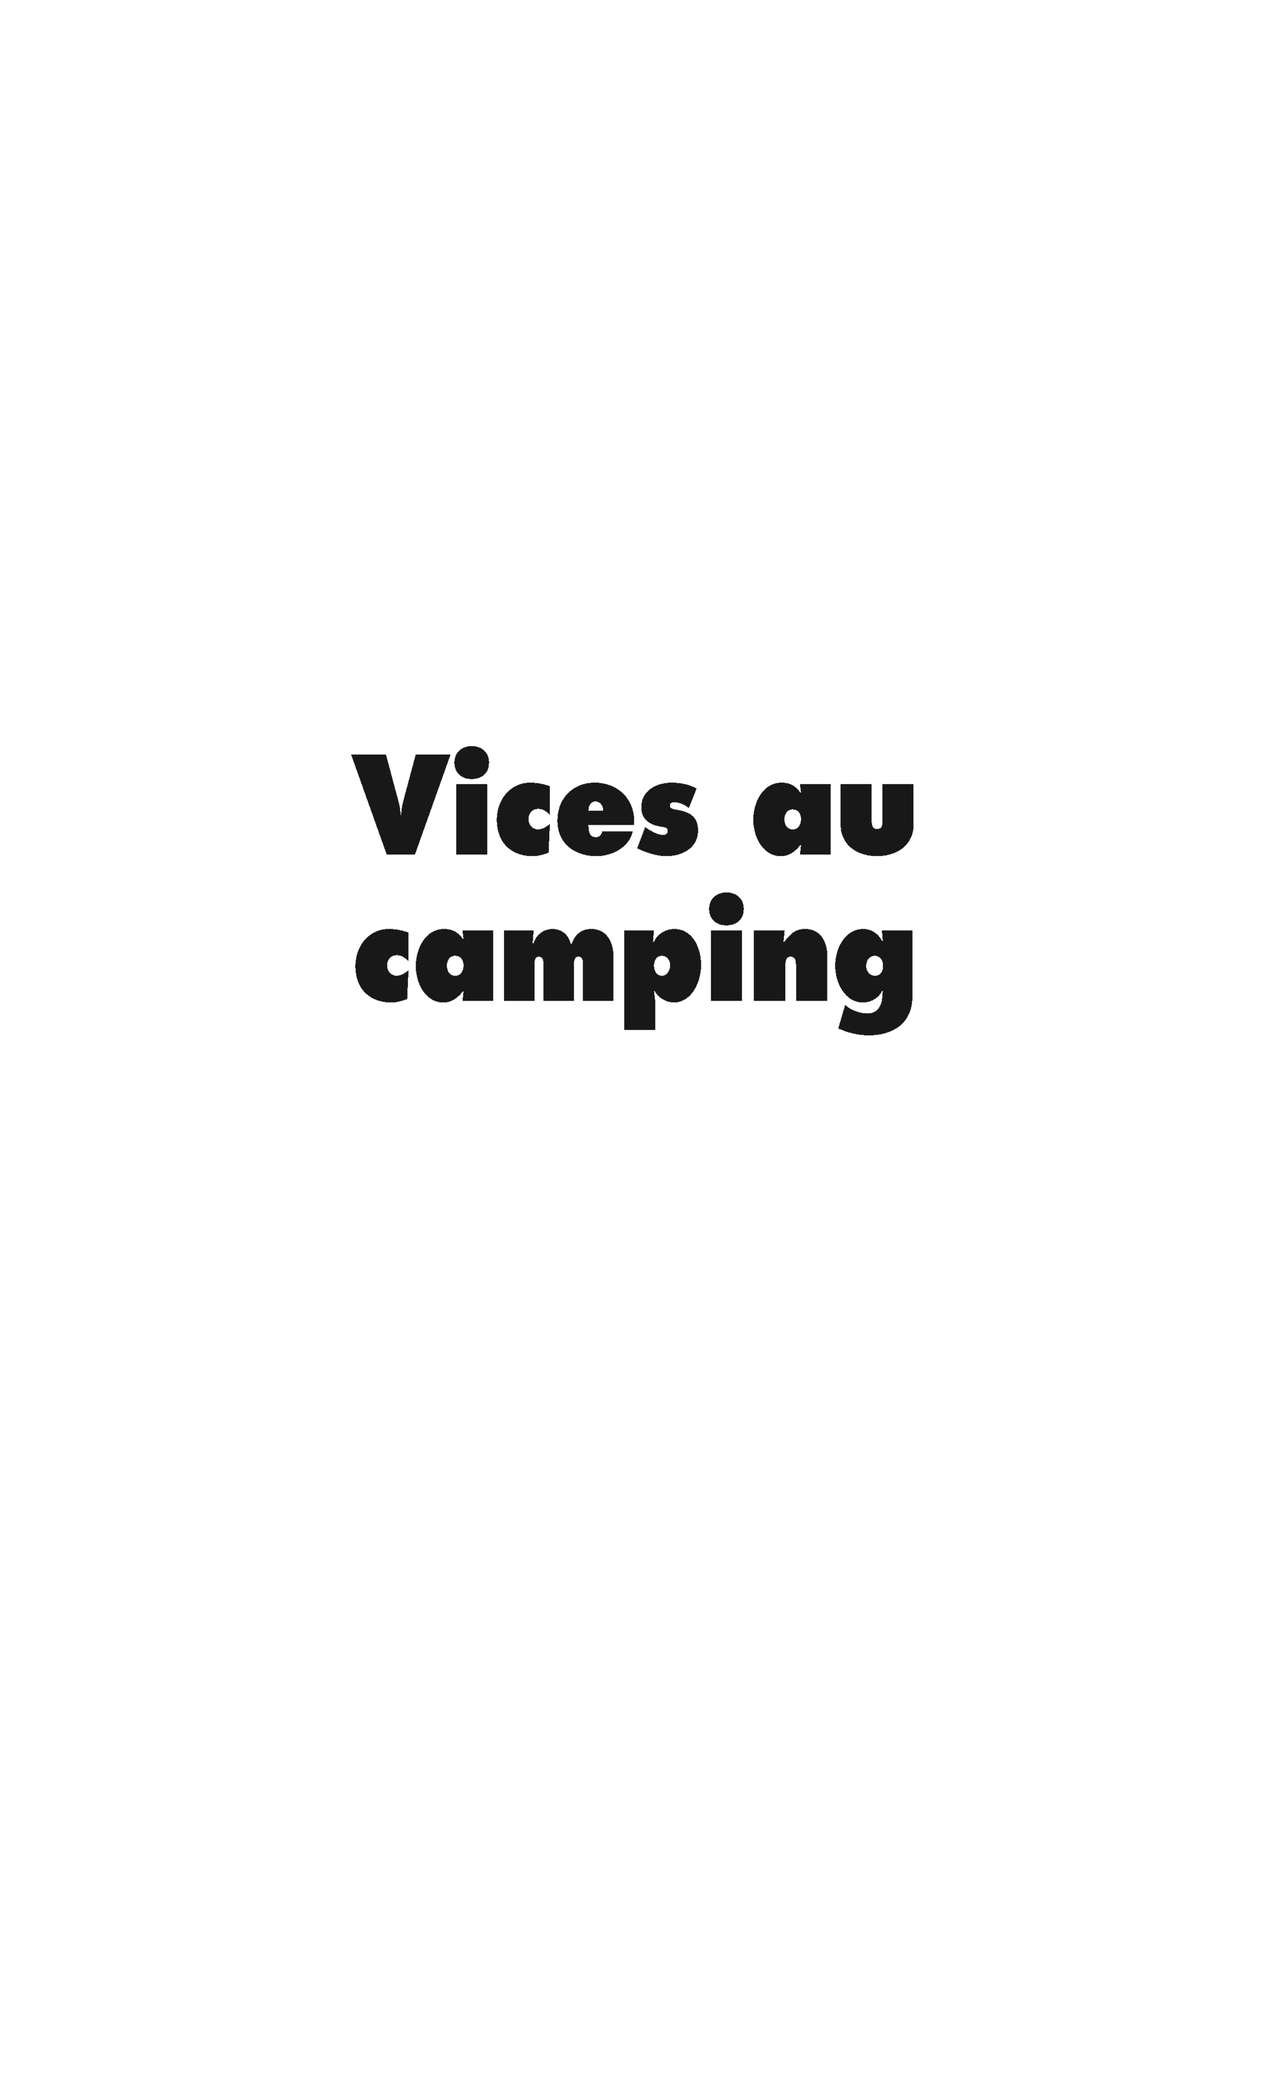 Vice au camping numero d'image 1